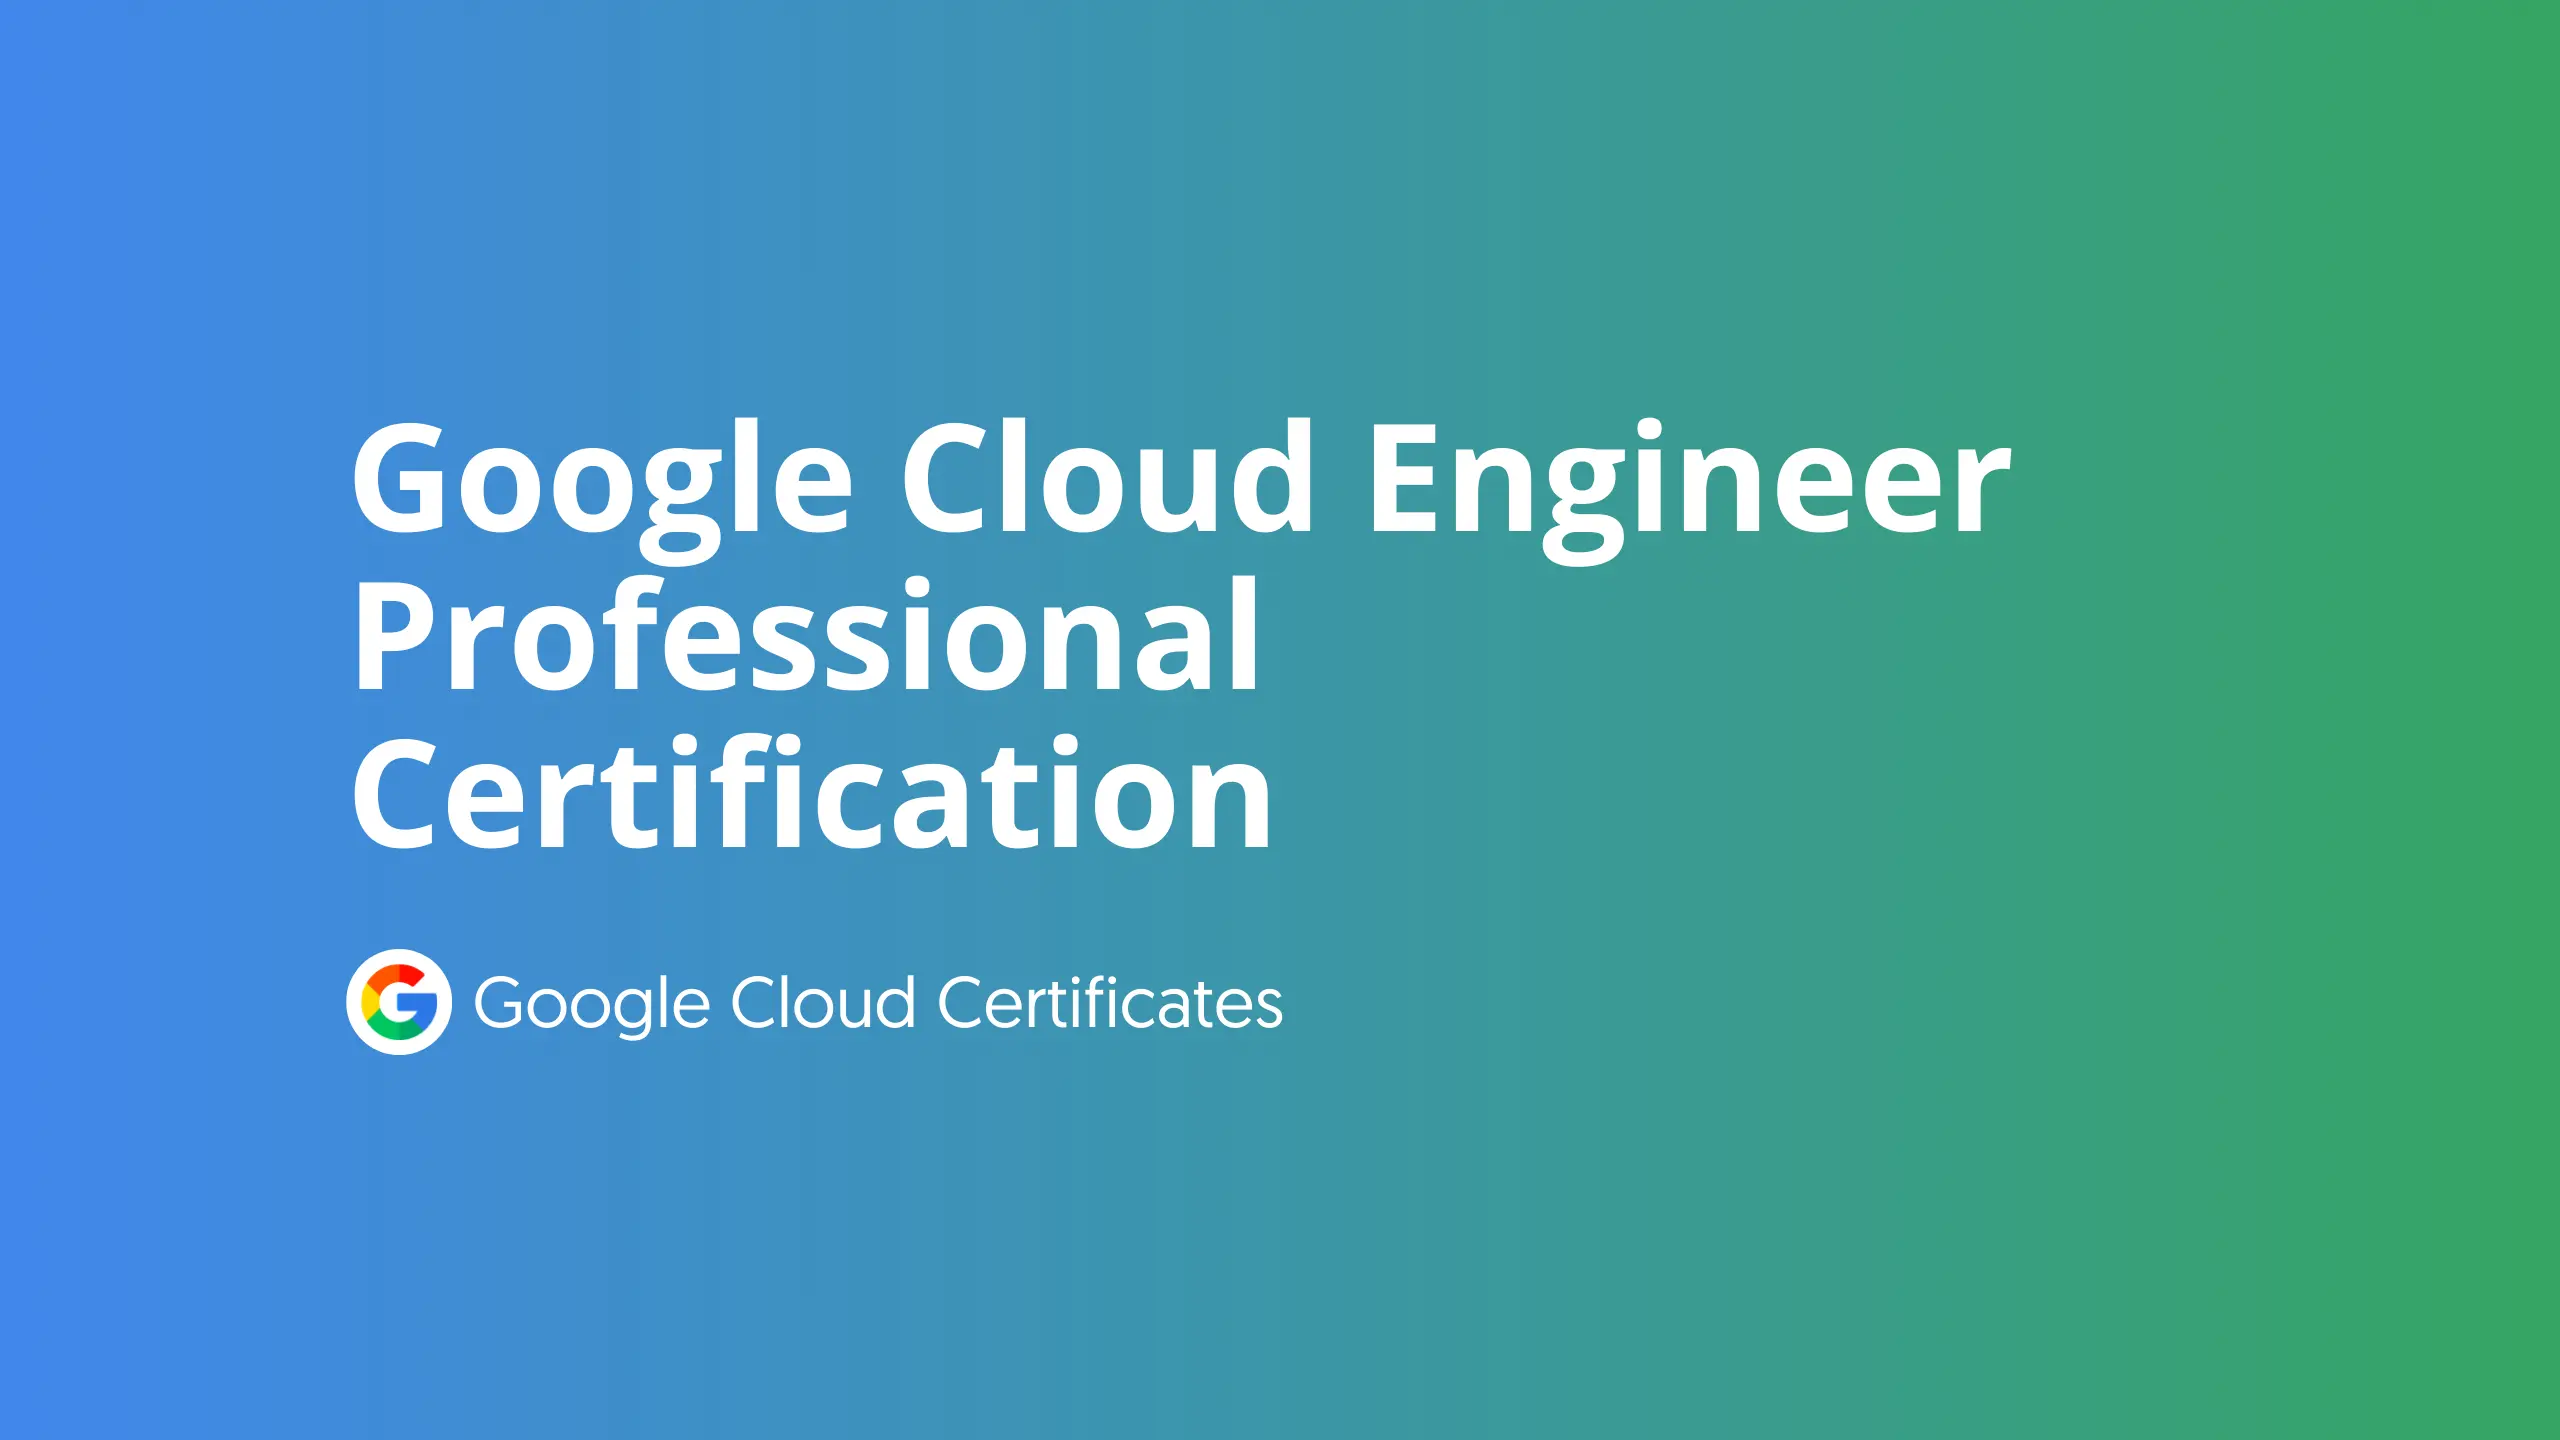 Google Cloud Engineer Professional Certification